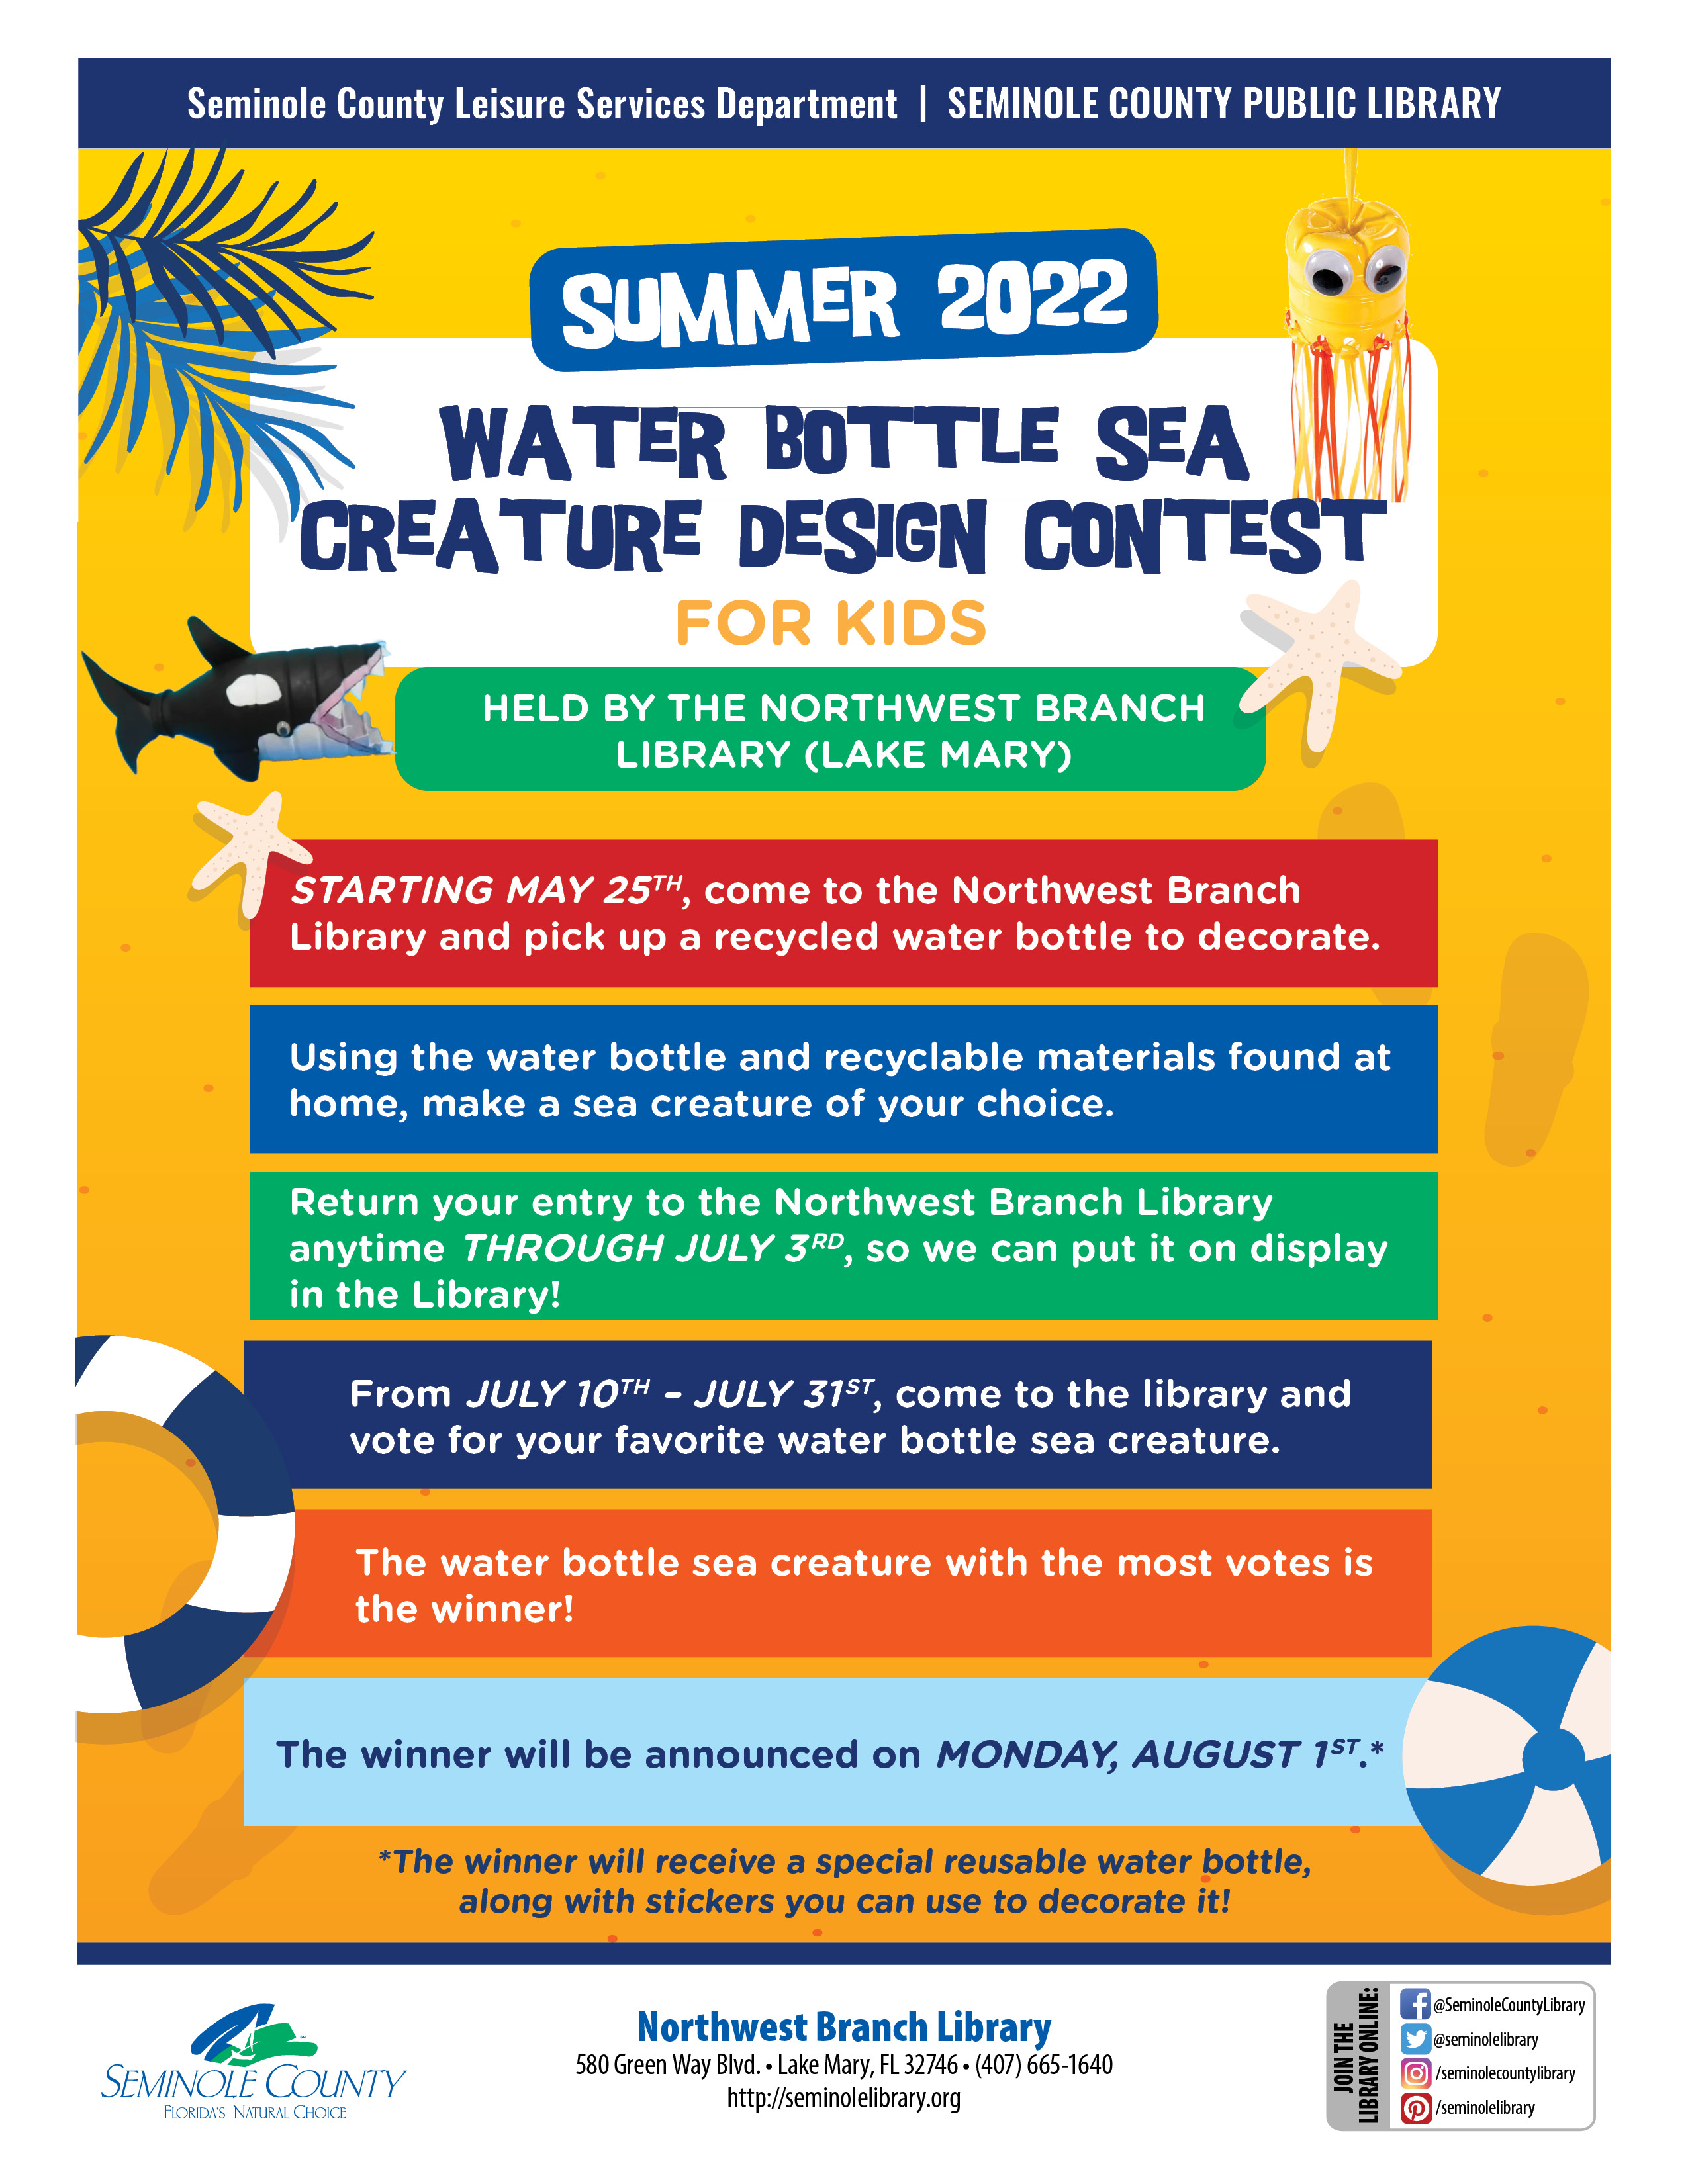 Water Bottle Sea Creature Design Contest - Northwest Branch Library